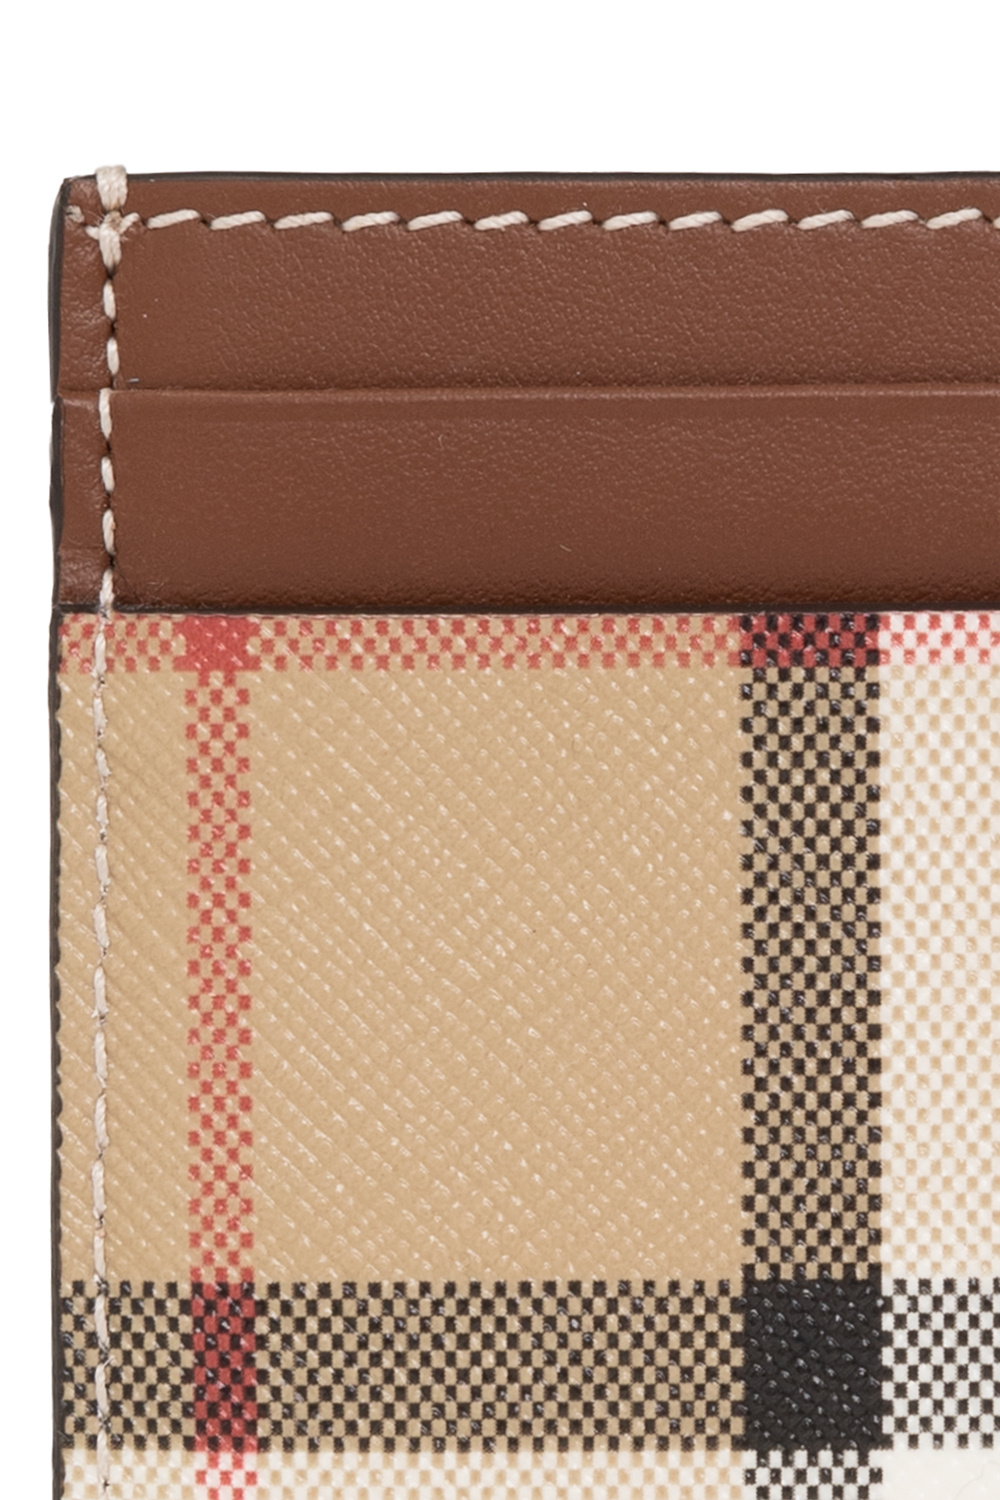 burberry leather ‘Sandon’ card holder